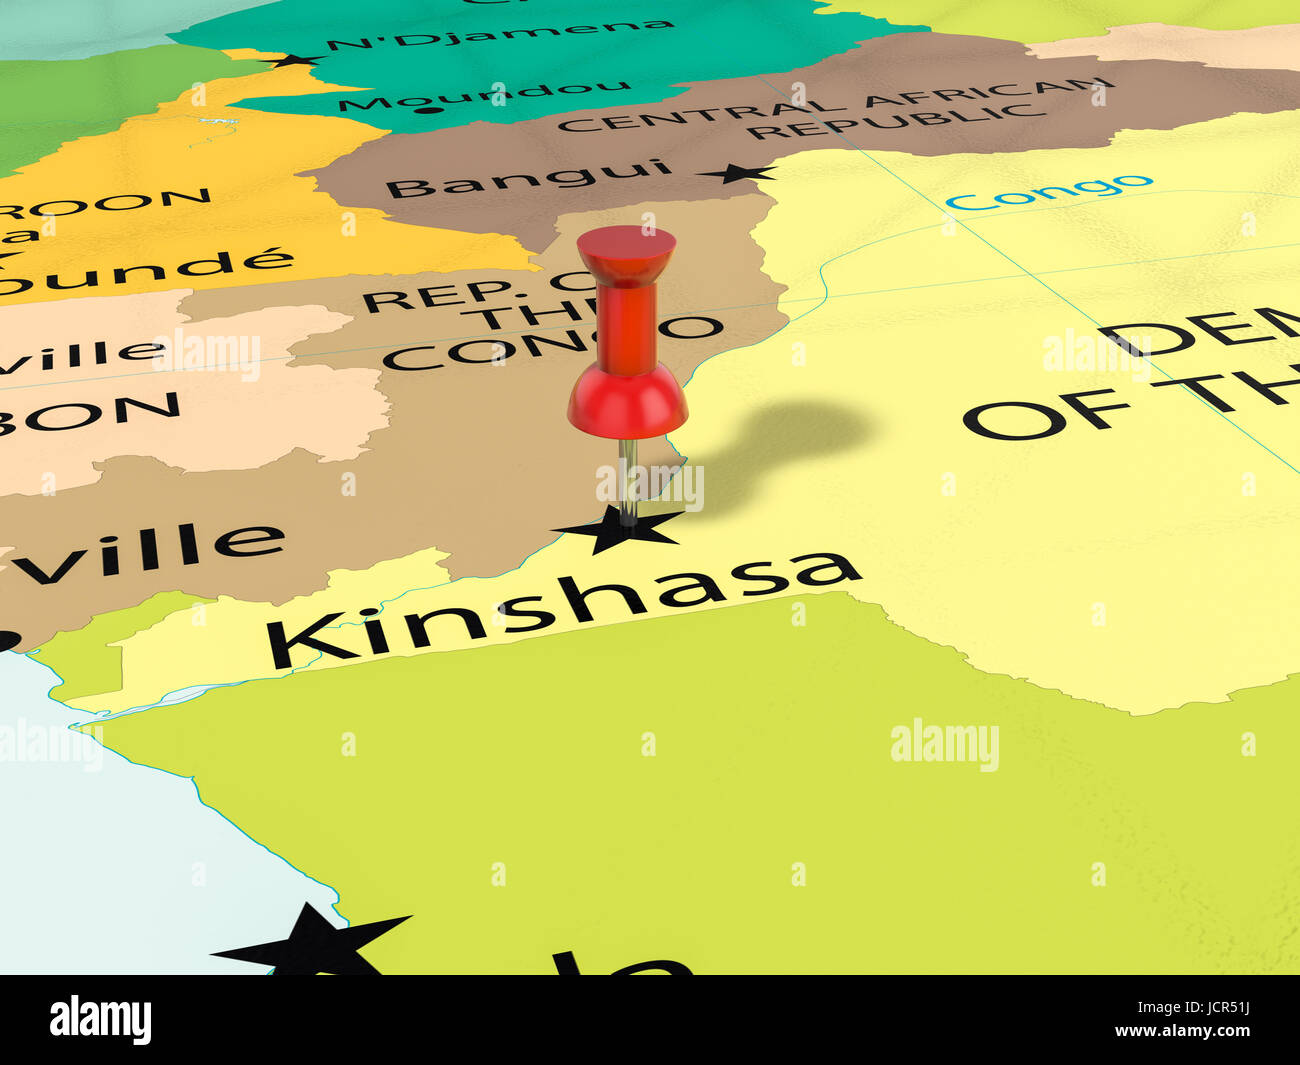 Pushpin on Kinshasa map background. 3d illustration. Stock Photo